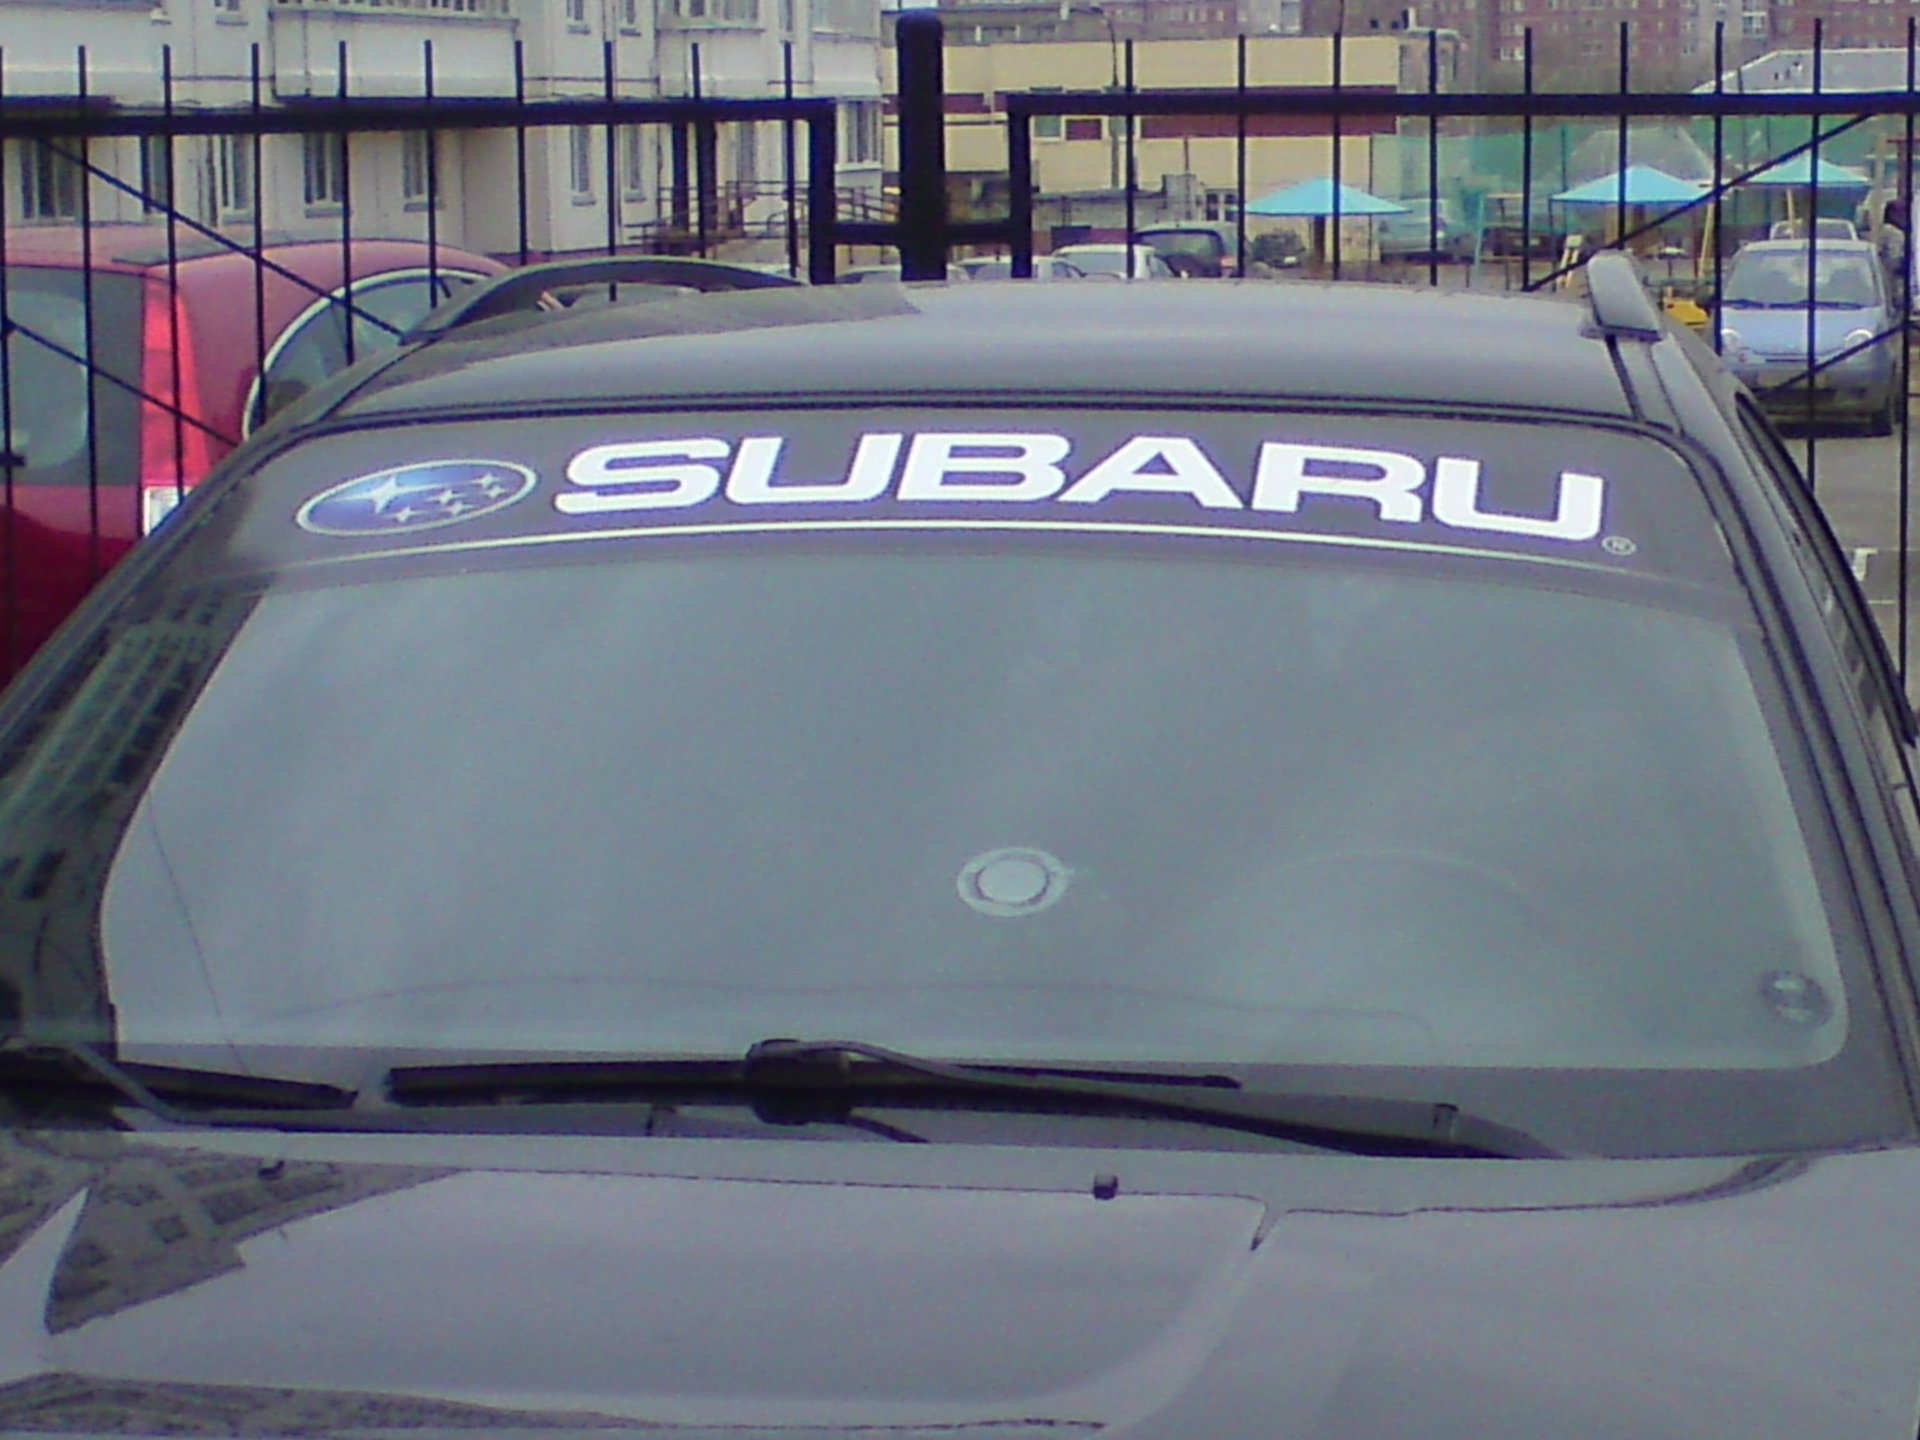 Козырек на лобовое стекло автомобиля. Стекло лобовое Субару Импреза 2008. Субару Форестер на лобовое полоса. Наклейка на заднее стекло Subaru Forester sj5. Лобовое стекло Subaru Impreza 2004.